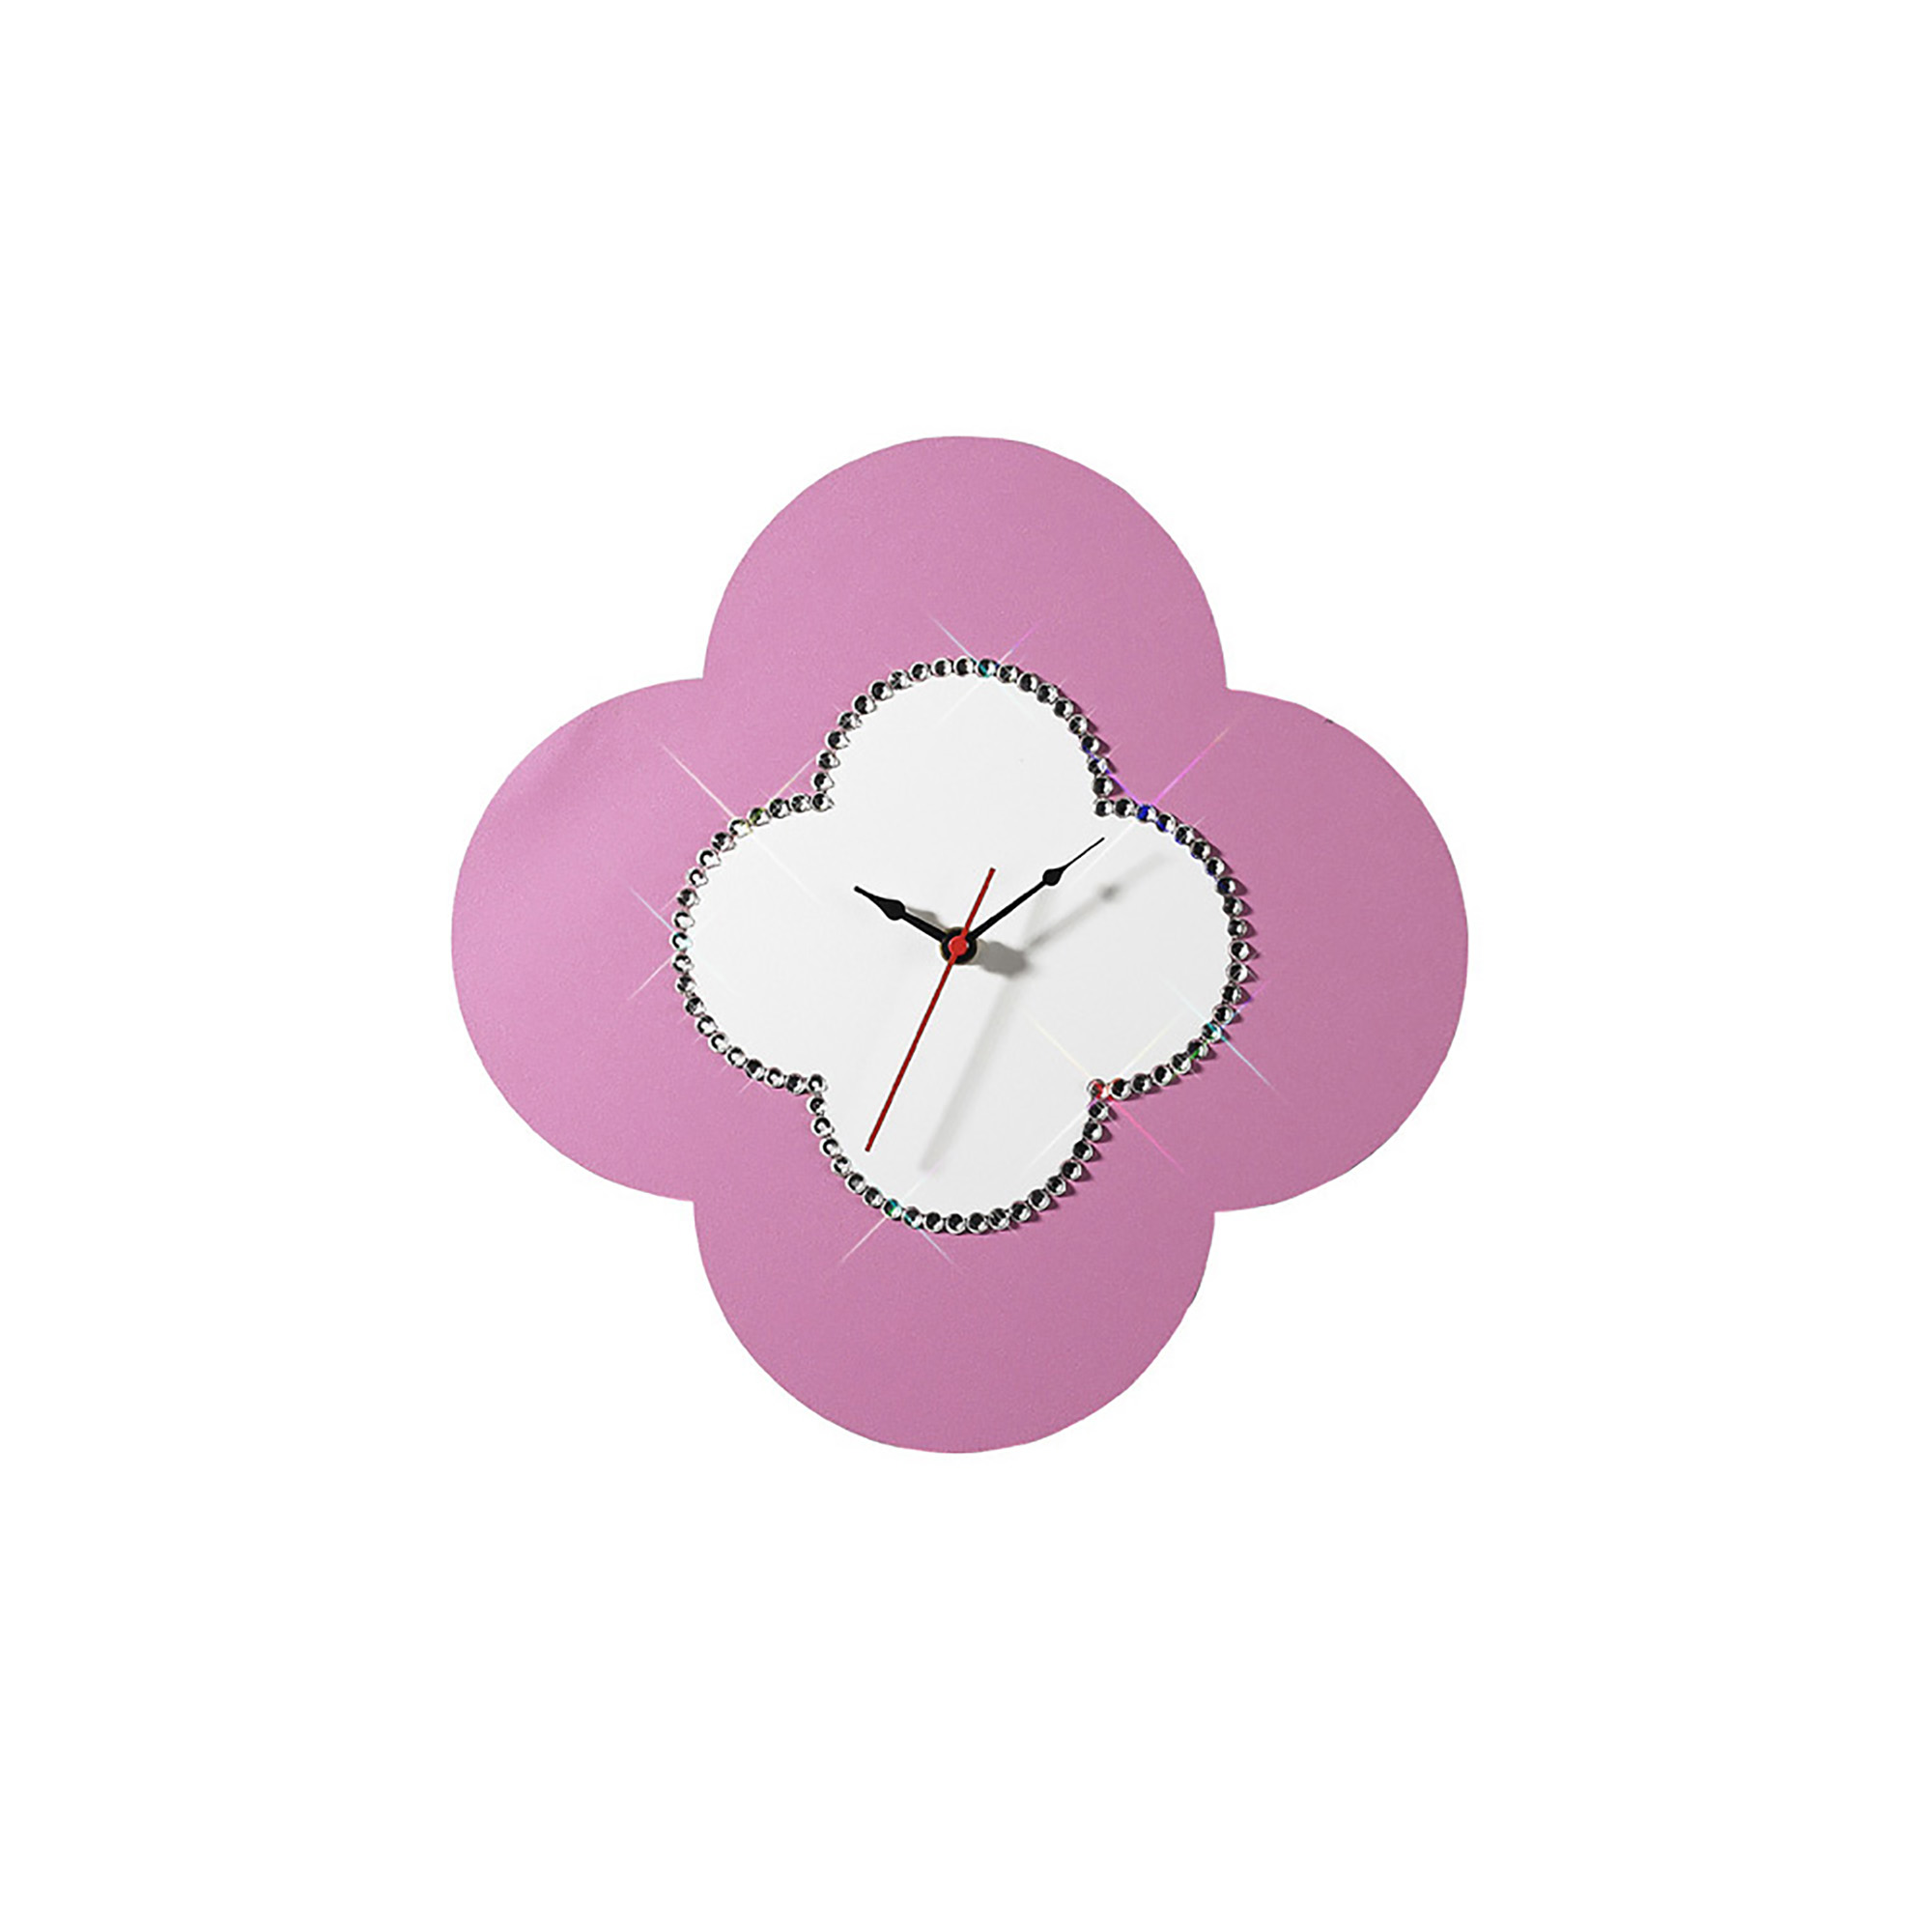 IL70119  Infinity Crystal Flower Clock